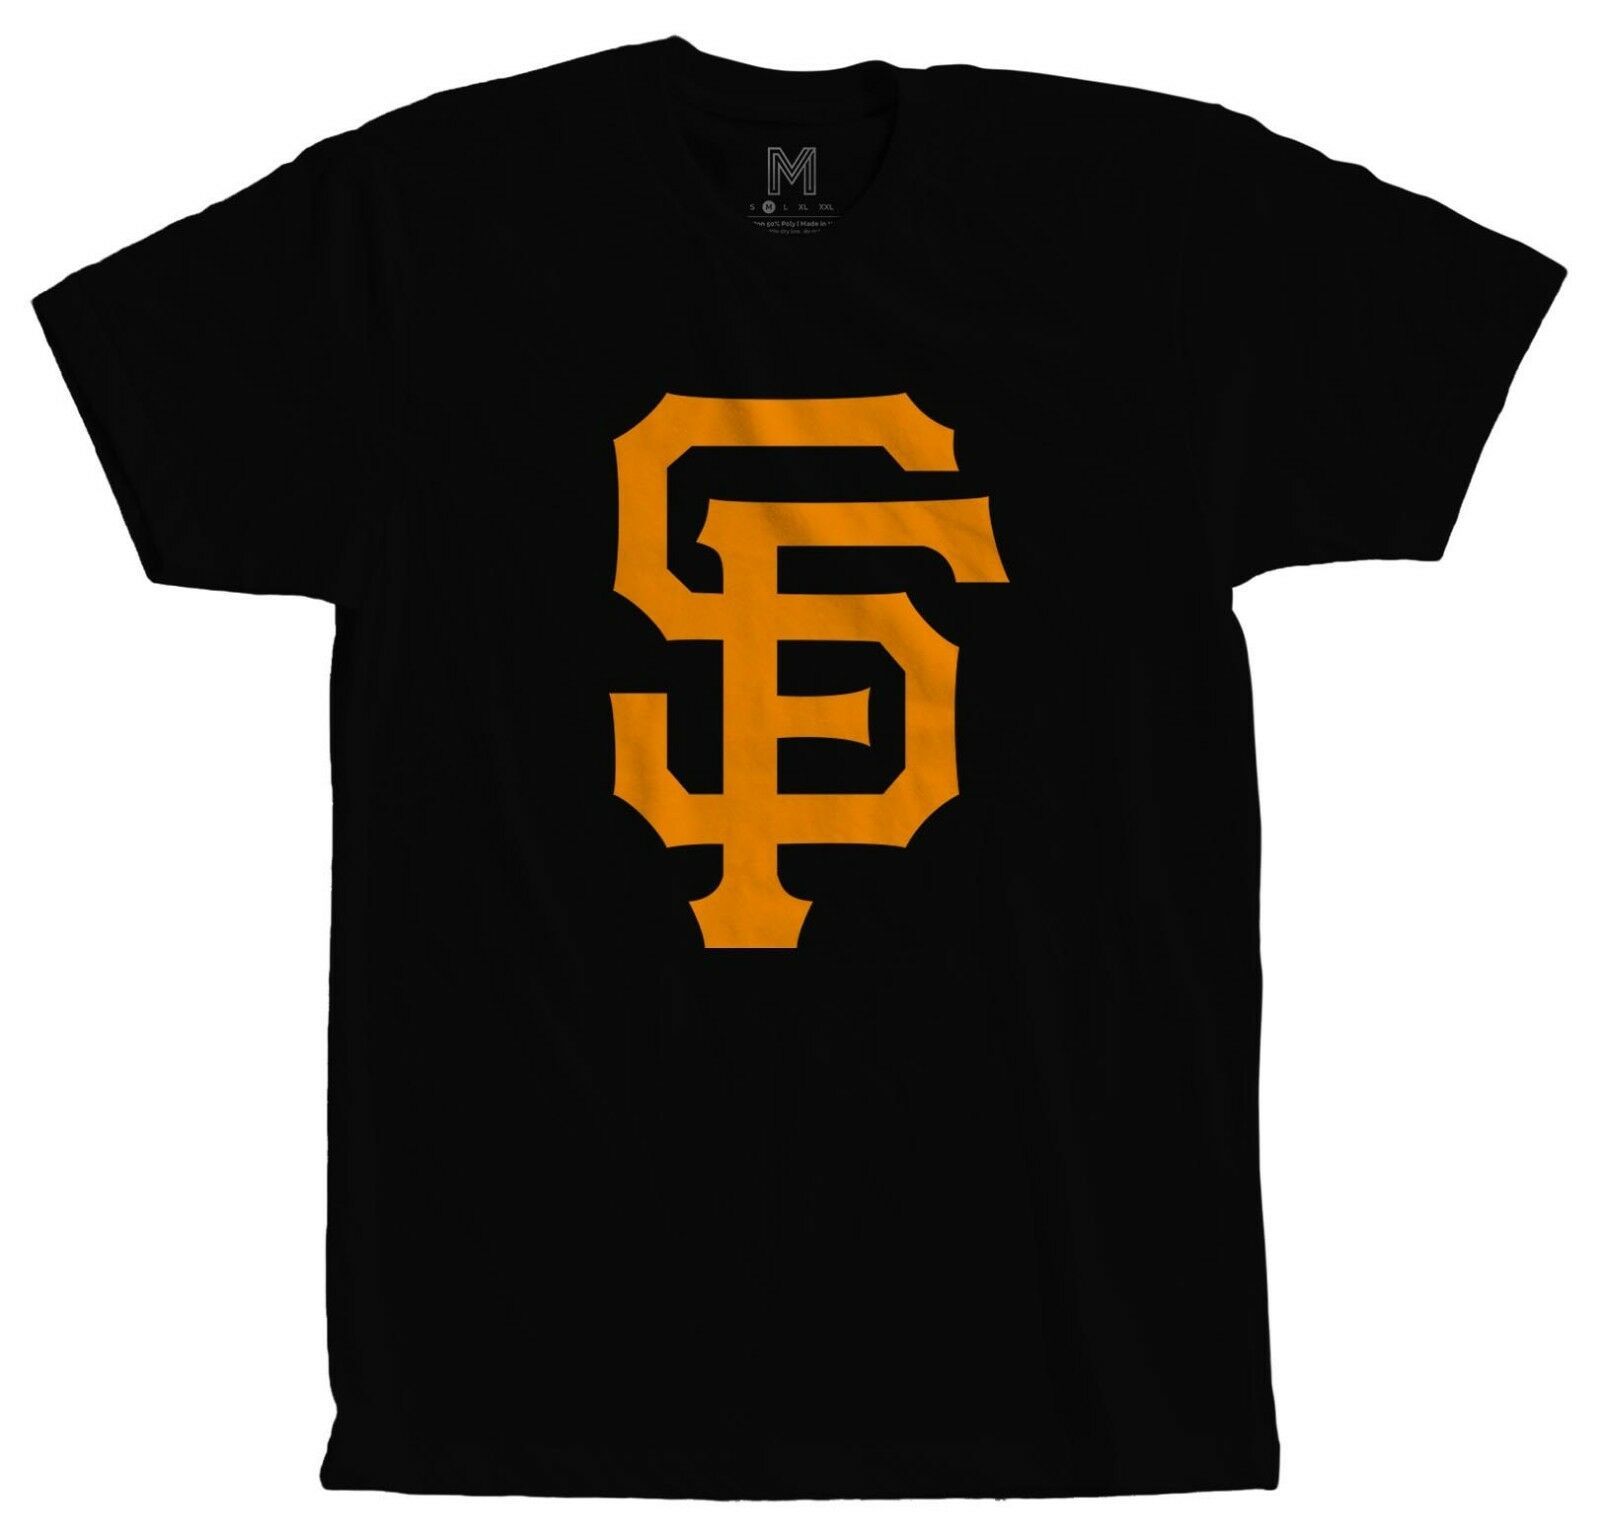 Baseball team t-shirt - comfortable tees with San Francisco logo ...